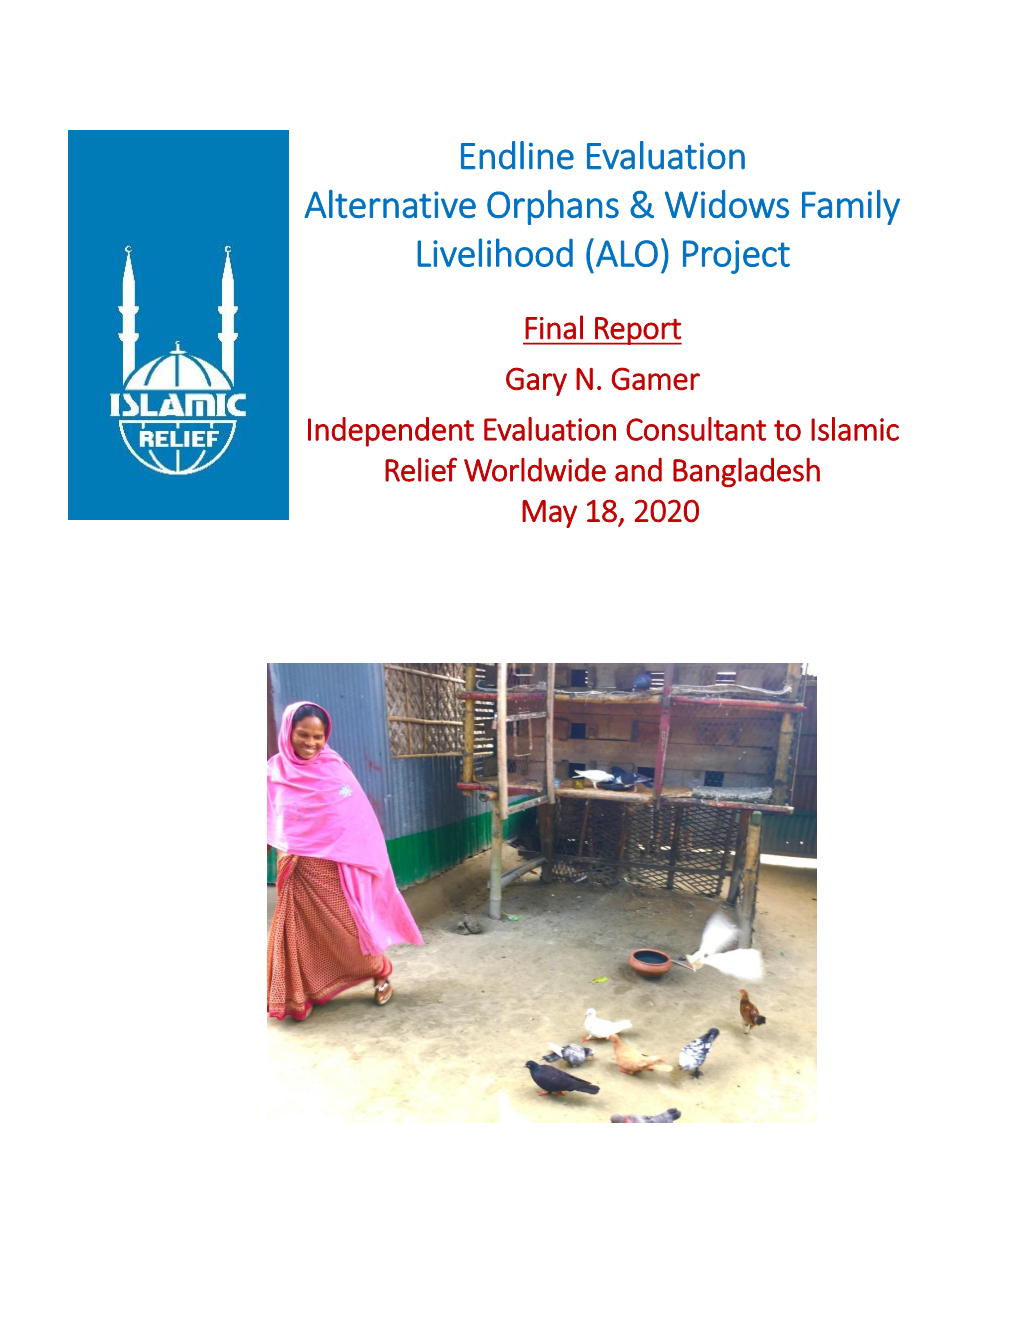 Endline Evaluation Alternative Orphans & Widows Family Livelihood